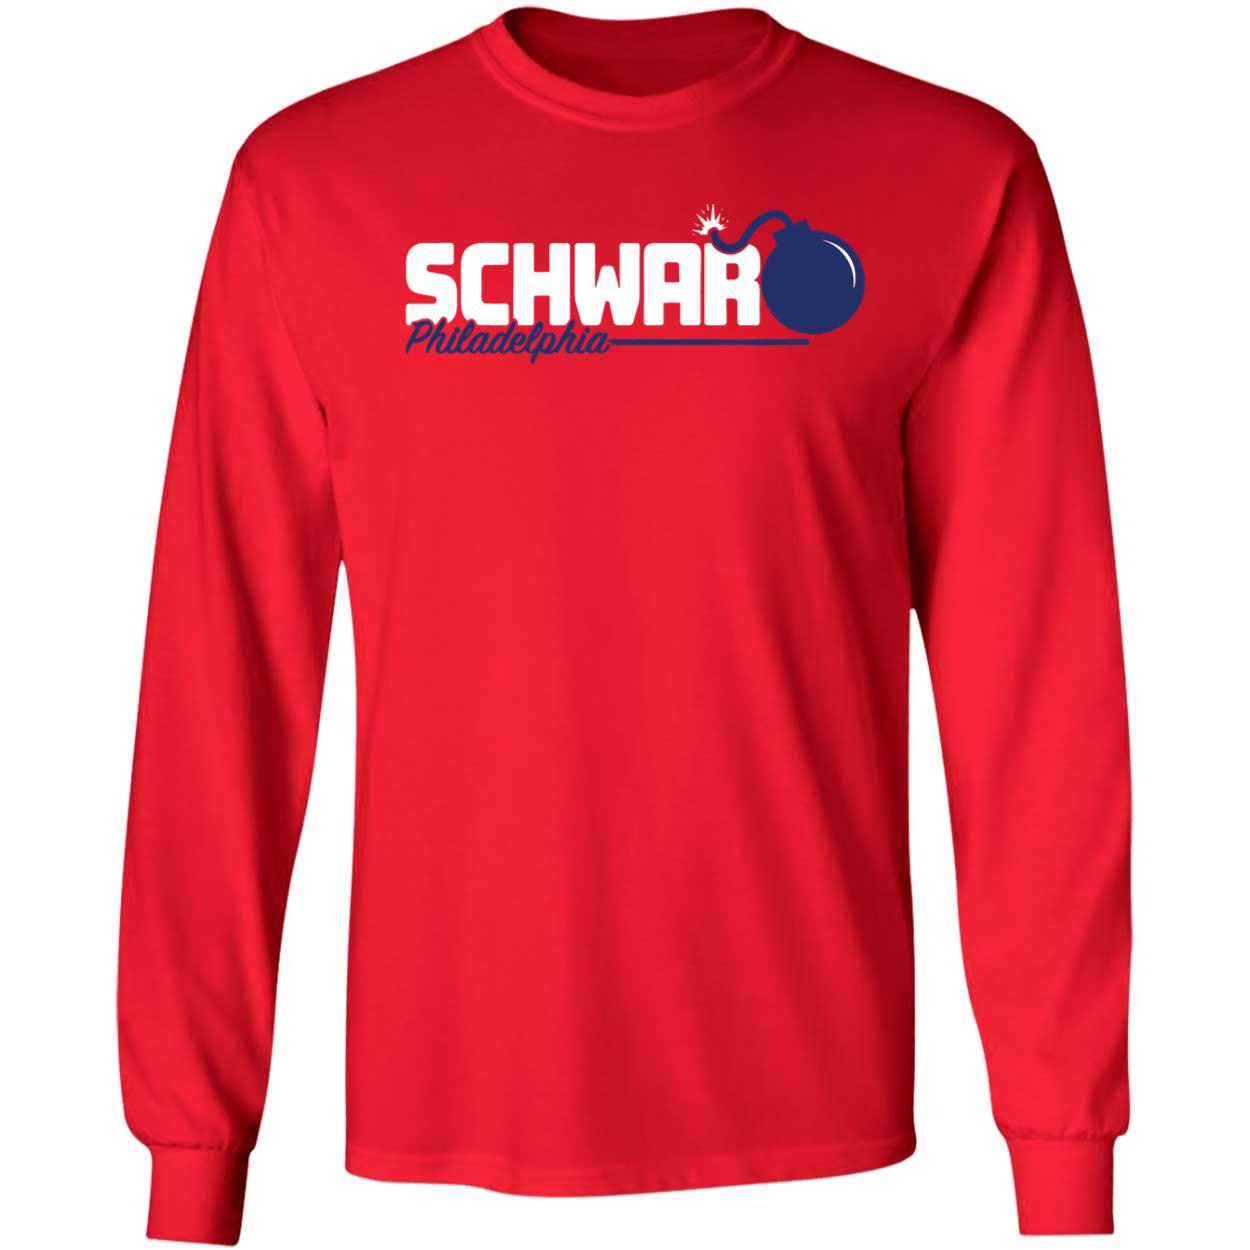 Phillies Kyle Schwarber Schwarbomb Shirt